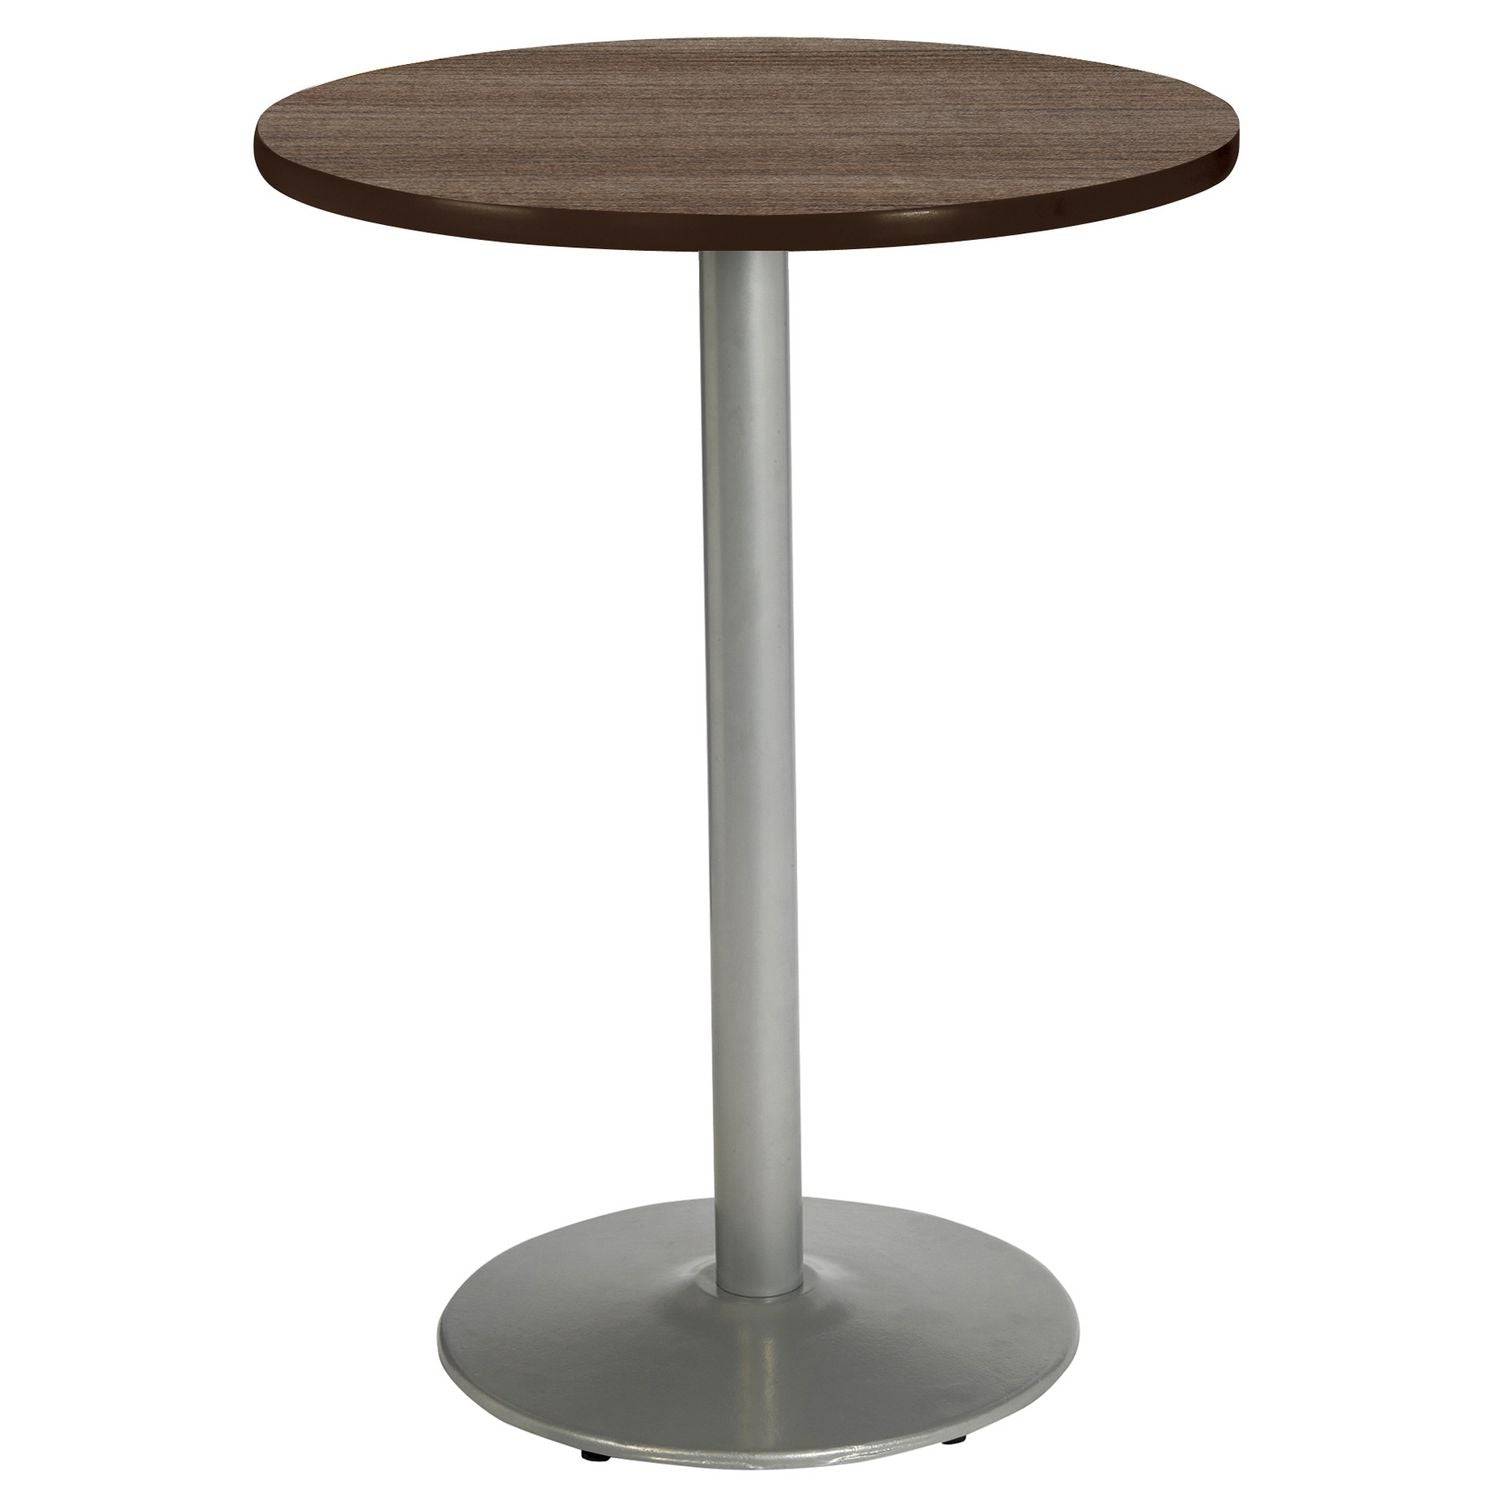 Pedestal Bistro Table with Four White Kool Series Barstools, Round, 36" Dia x 41h, Studio Teak, Ships in 4-6 Business Days - 2